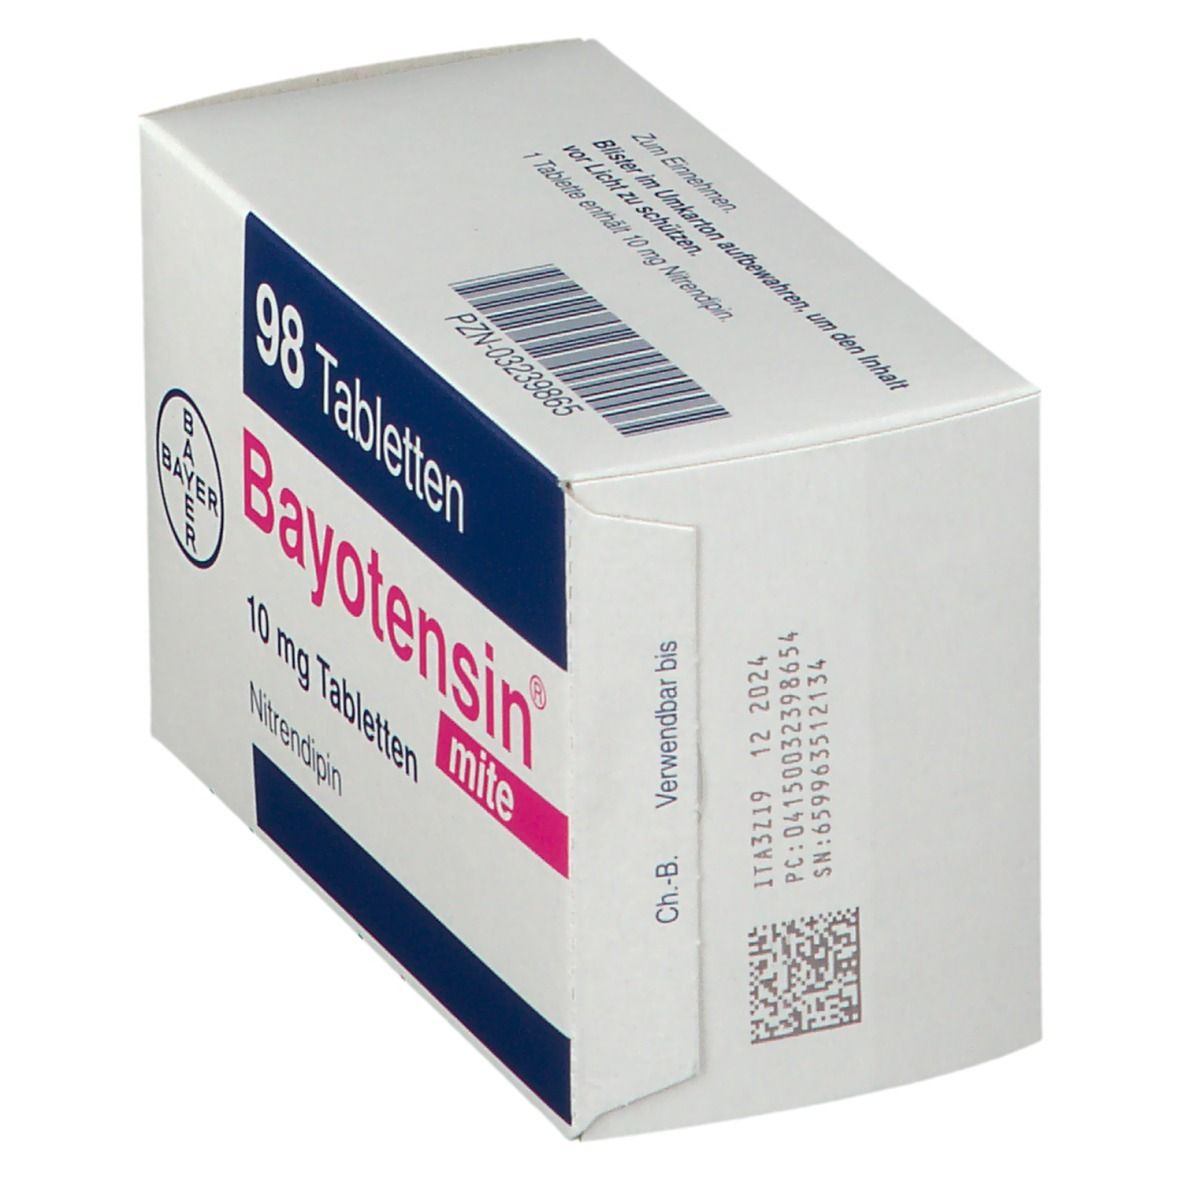 Bayotensin® mite 10 mg